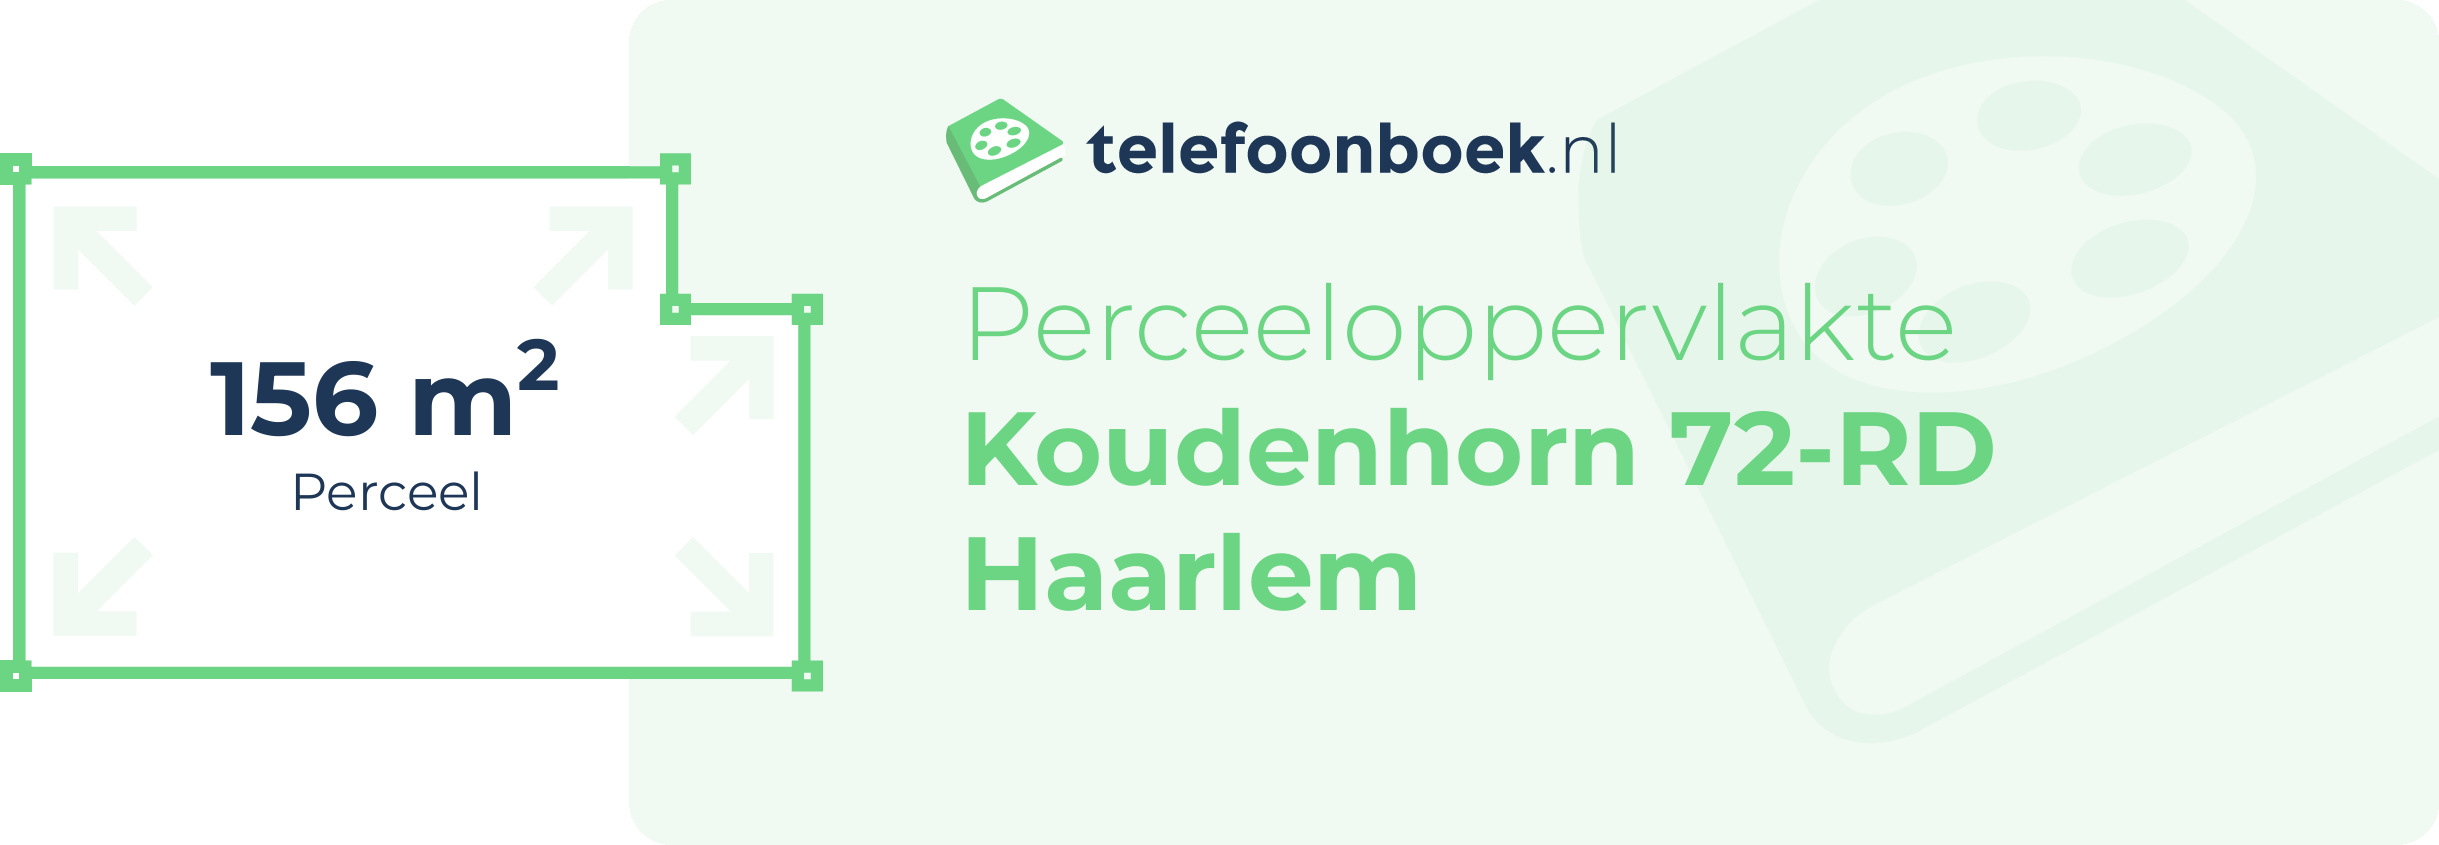 Perceeloppervlakte Koudenhorn 72-RD Haarlem